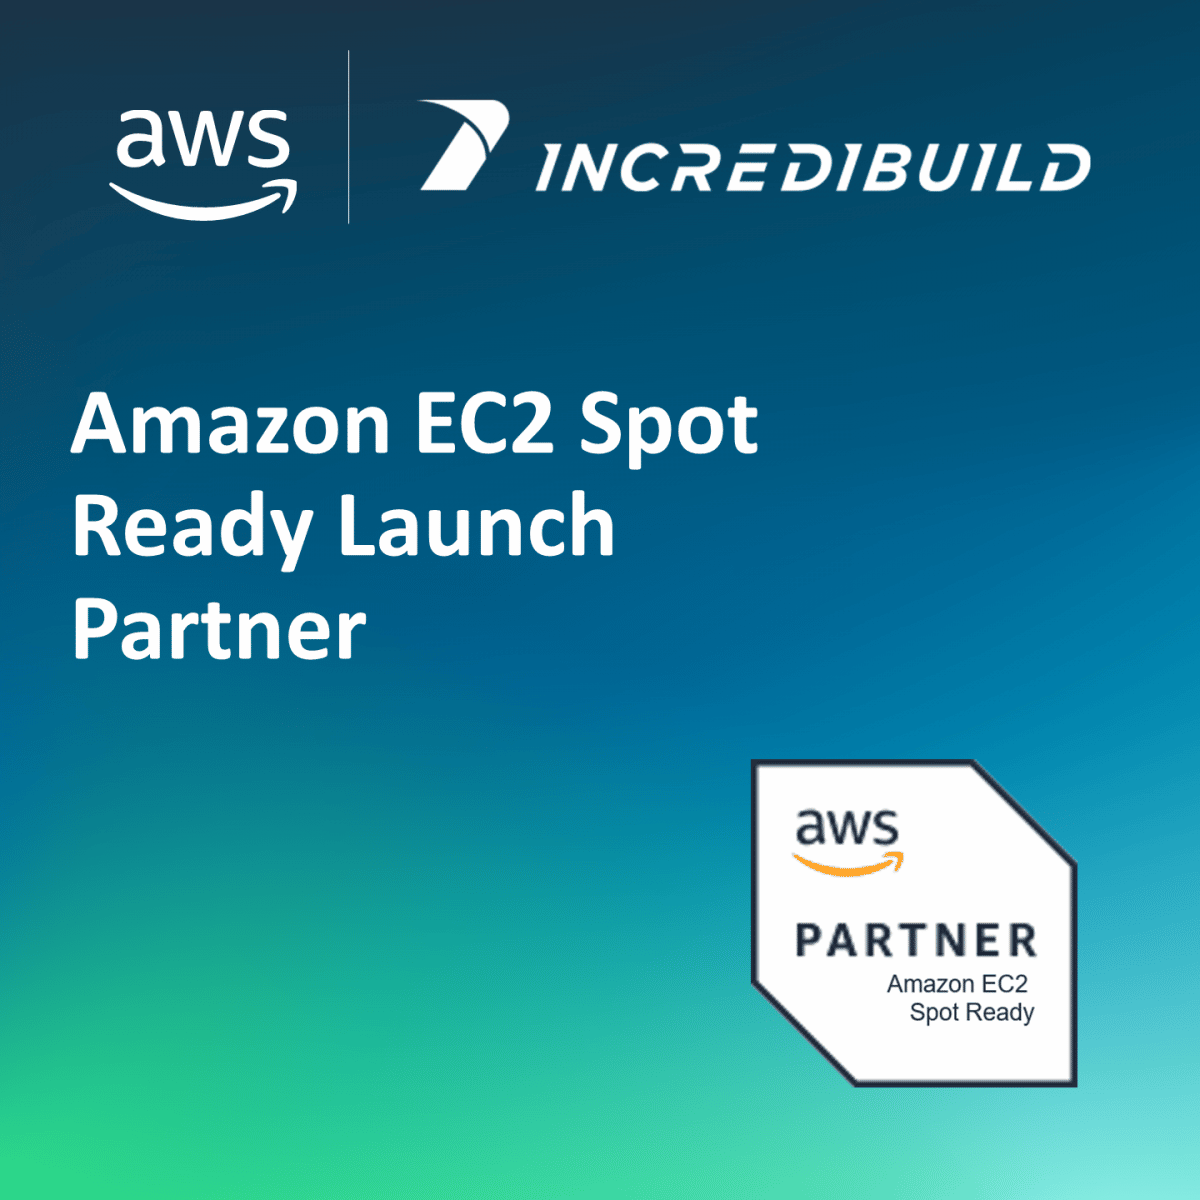 Incredibuild Joins the Amazon EC2 Spot Ready Partner Program